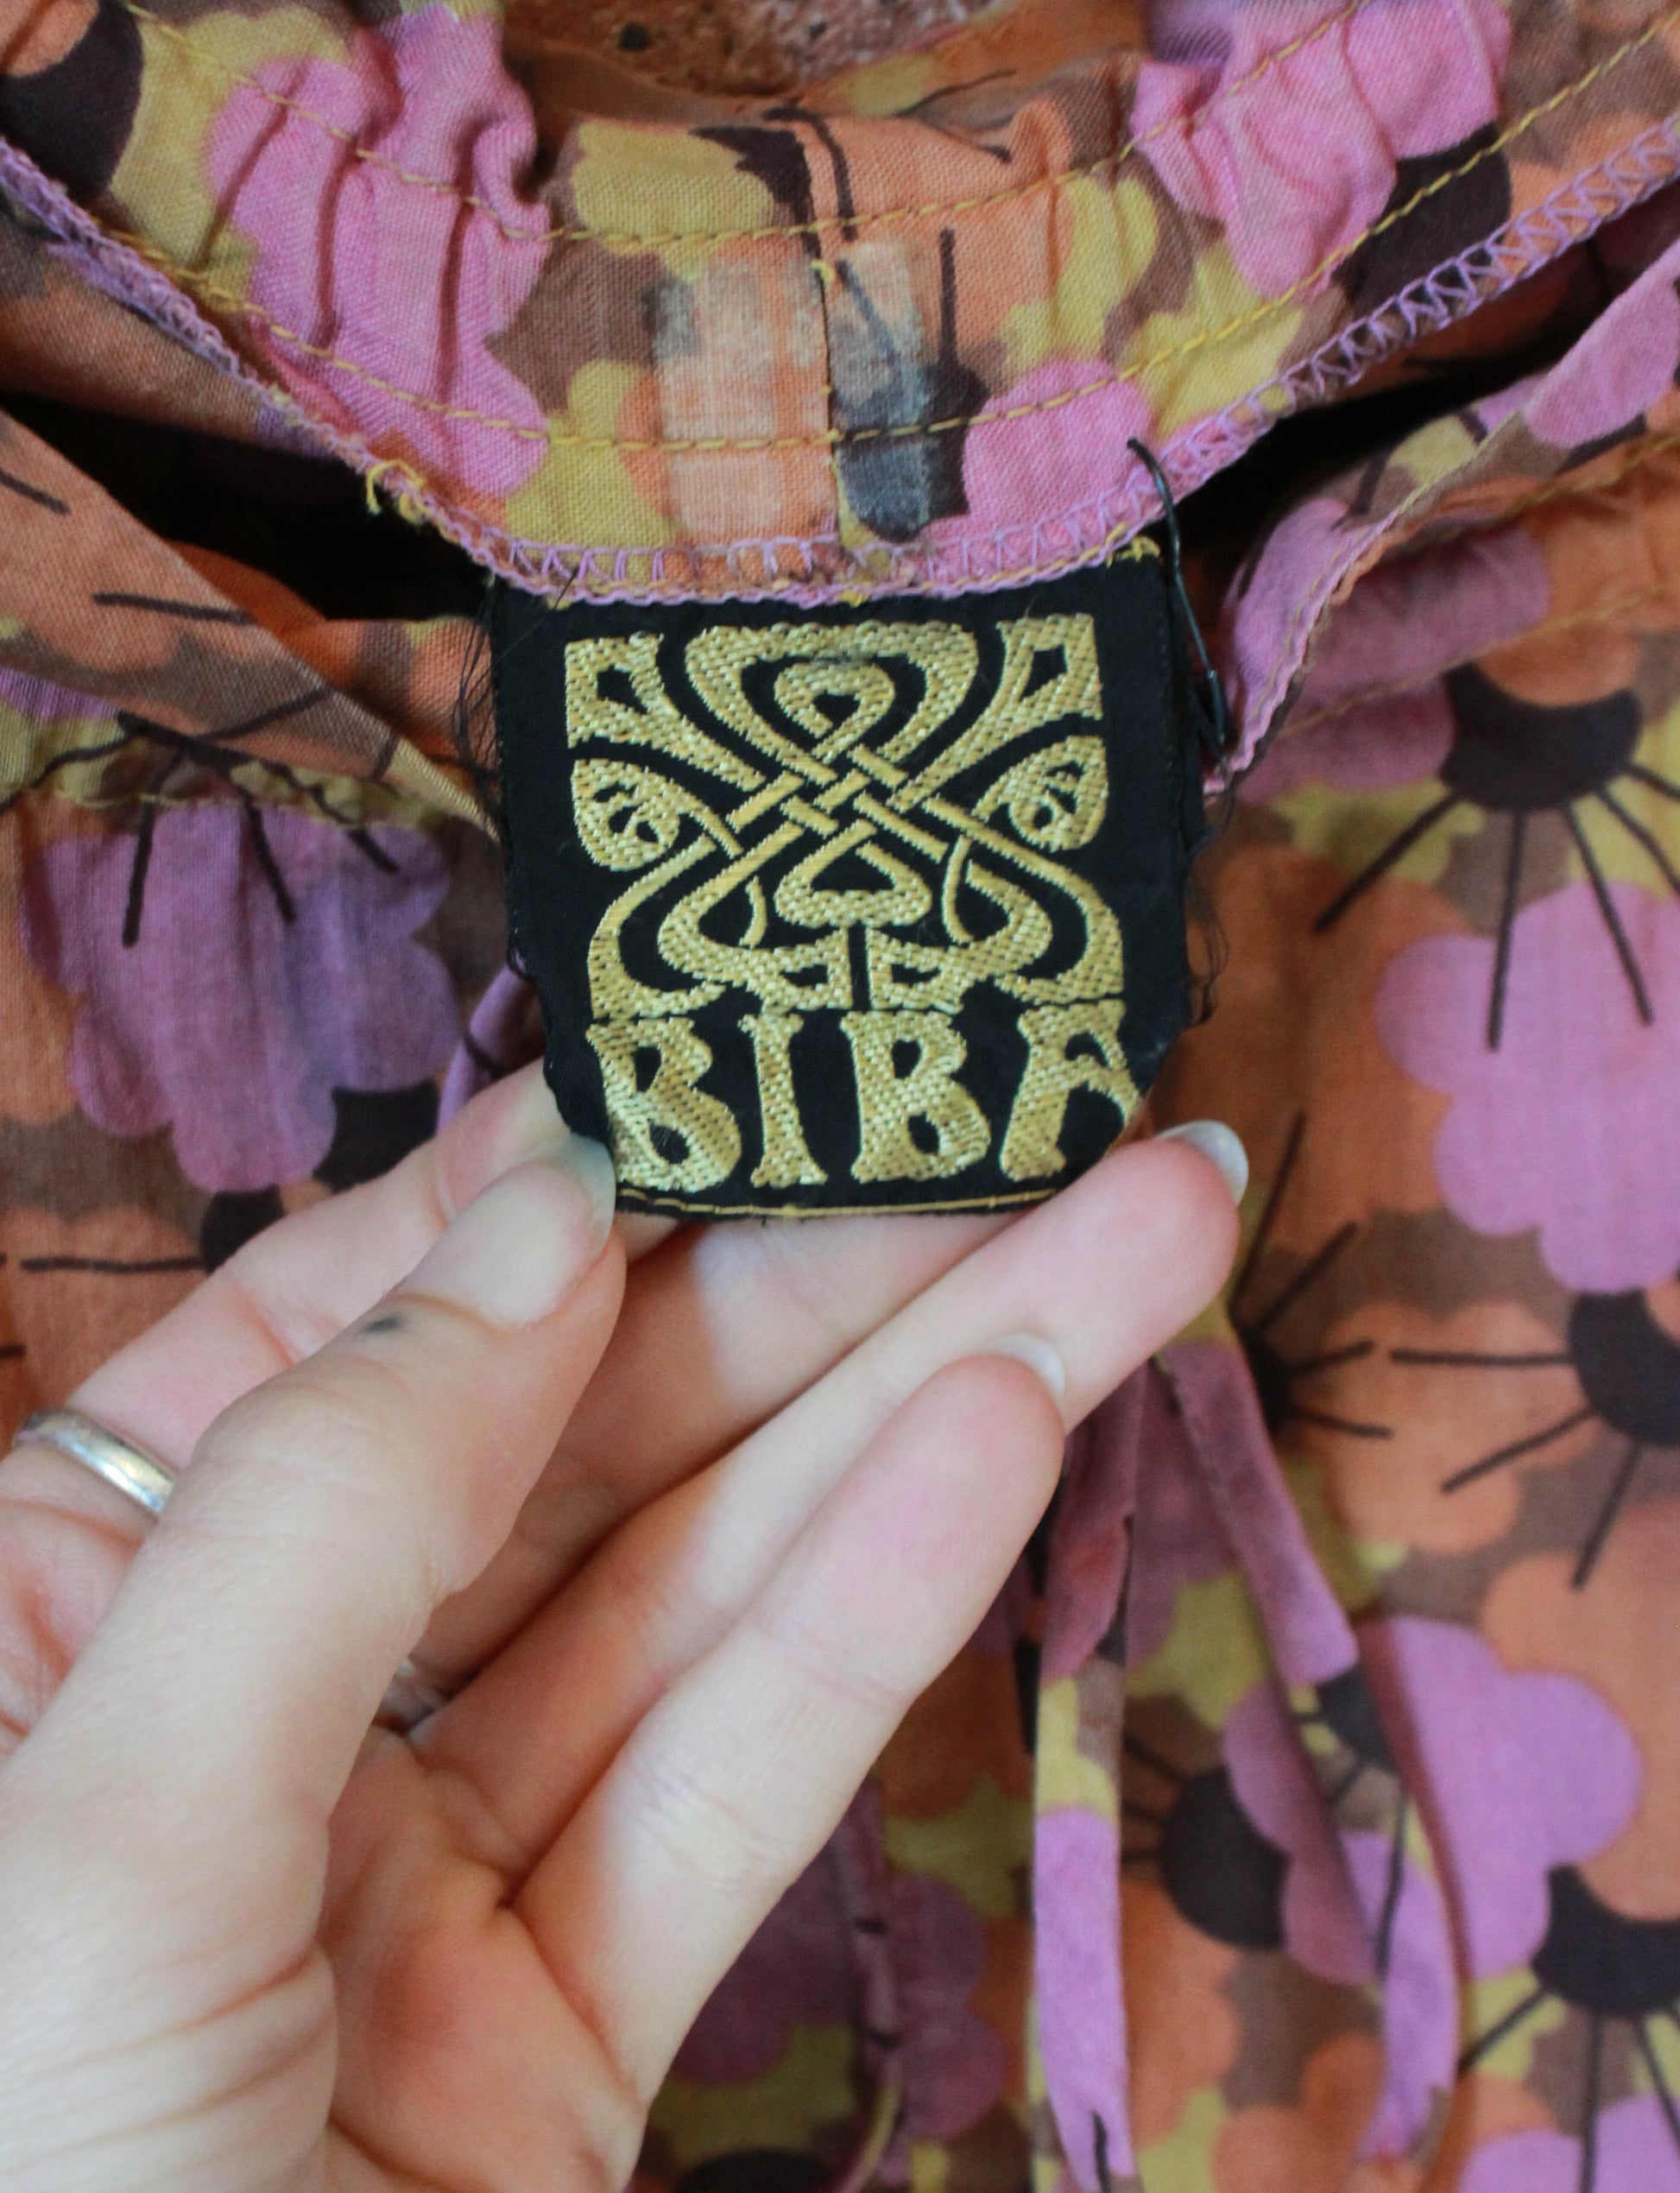 Women's Vintage 60's Biba Flower Pattern Dress - Small/Medium